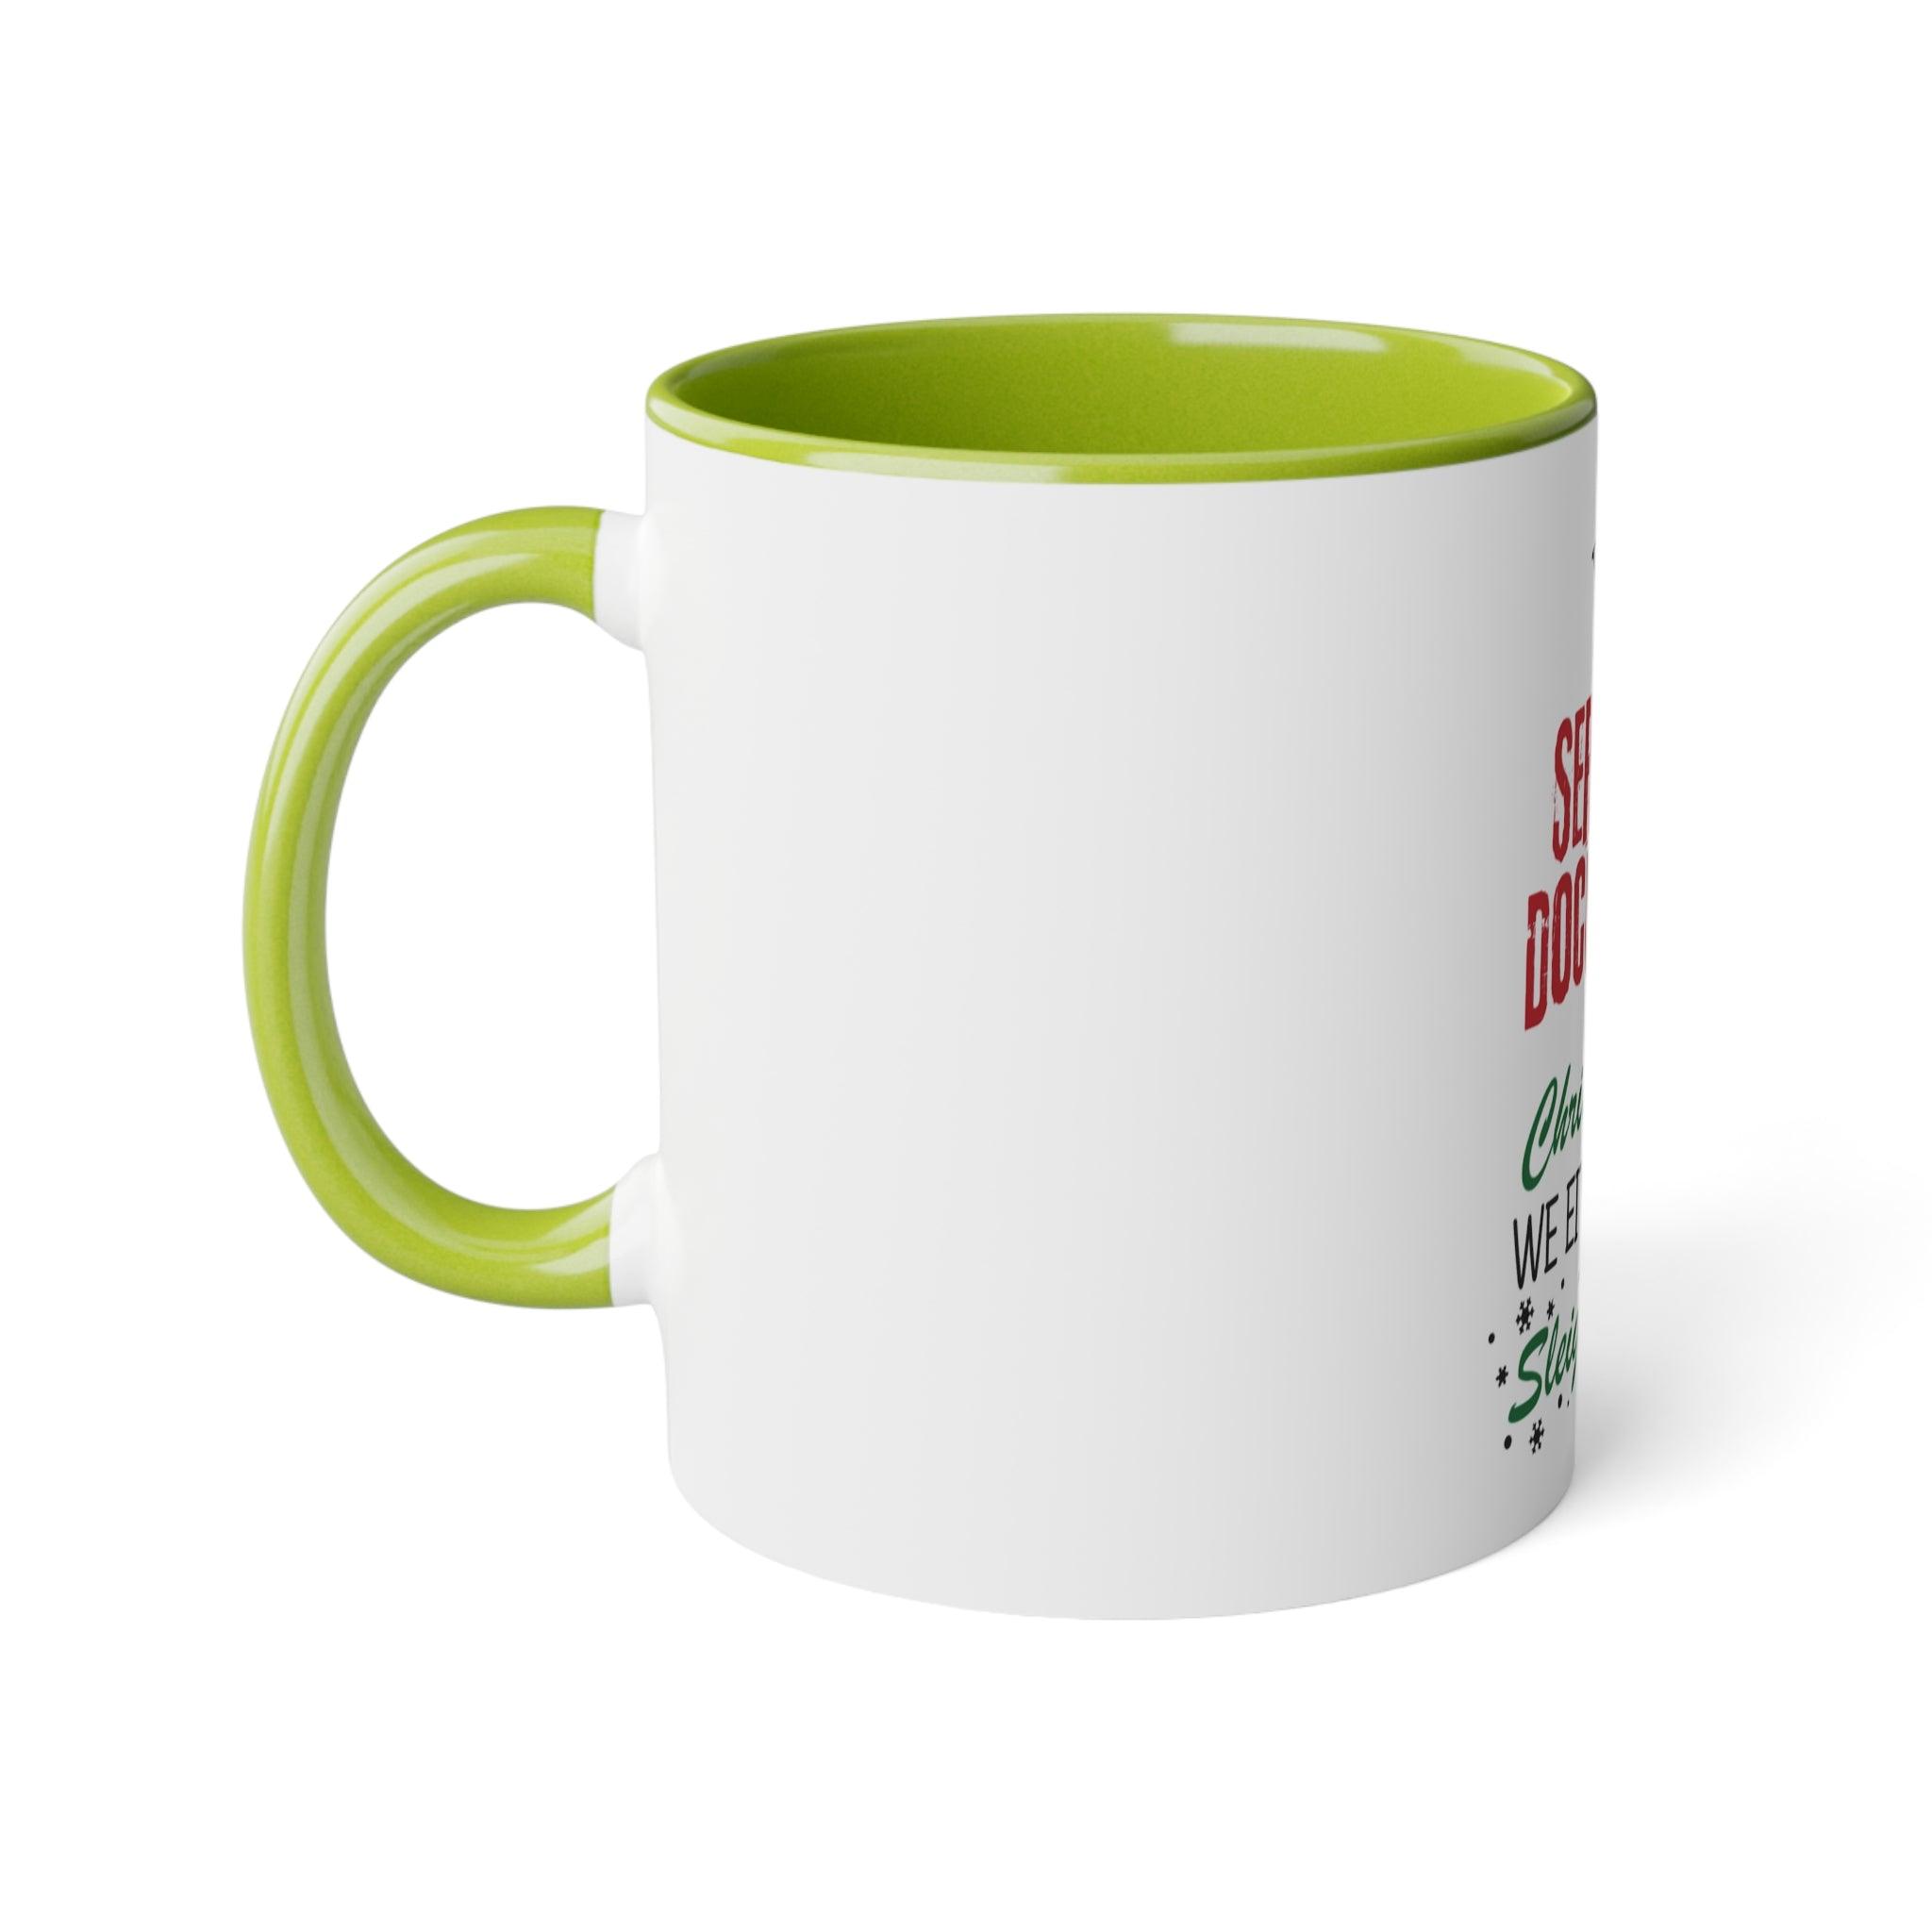 Sleighin' or Slayin' 11 oz Ceramic Coffee Tea Mug